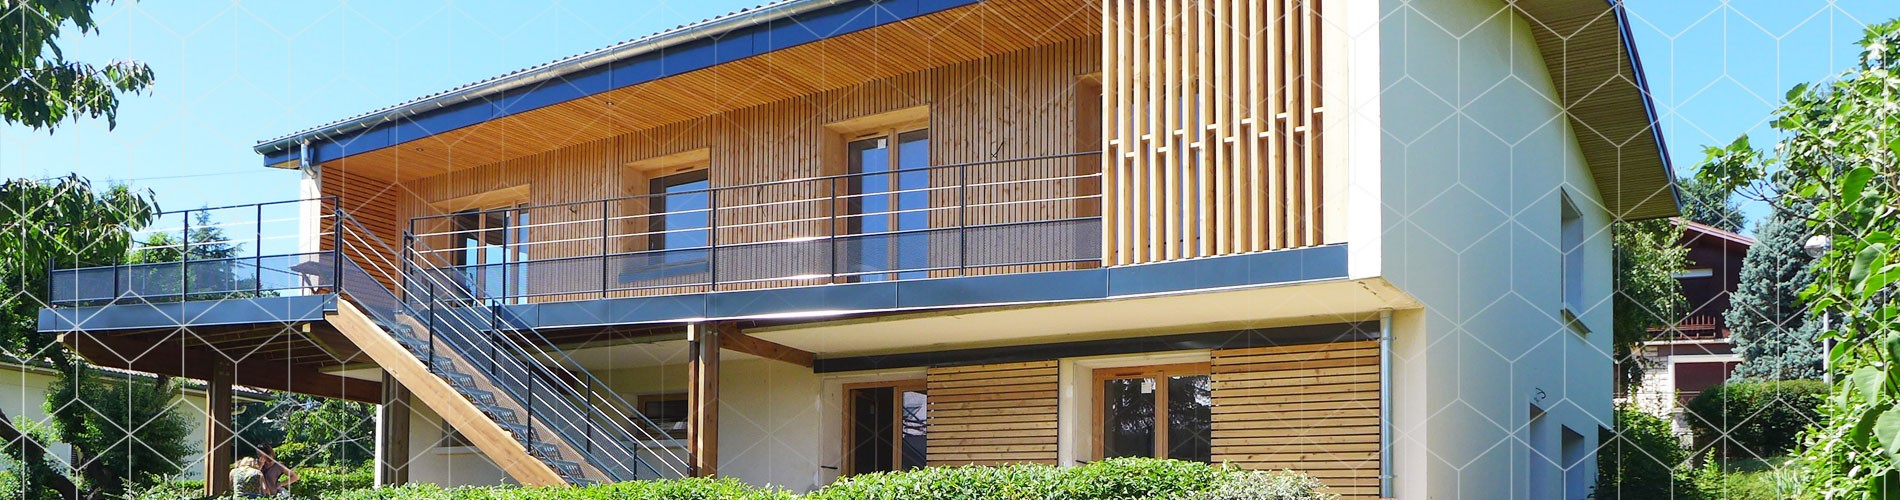 asb architecte architecture chambery maison individuelle bois neuf contemporain